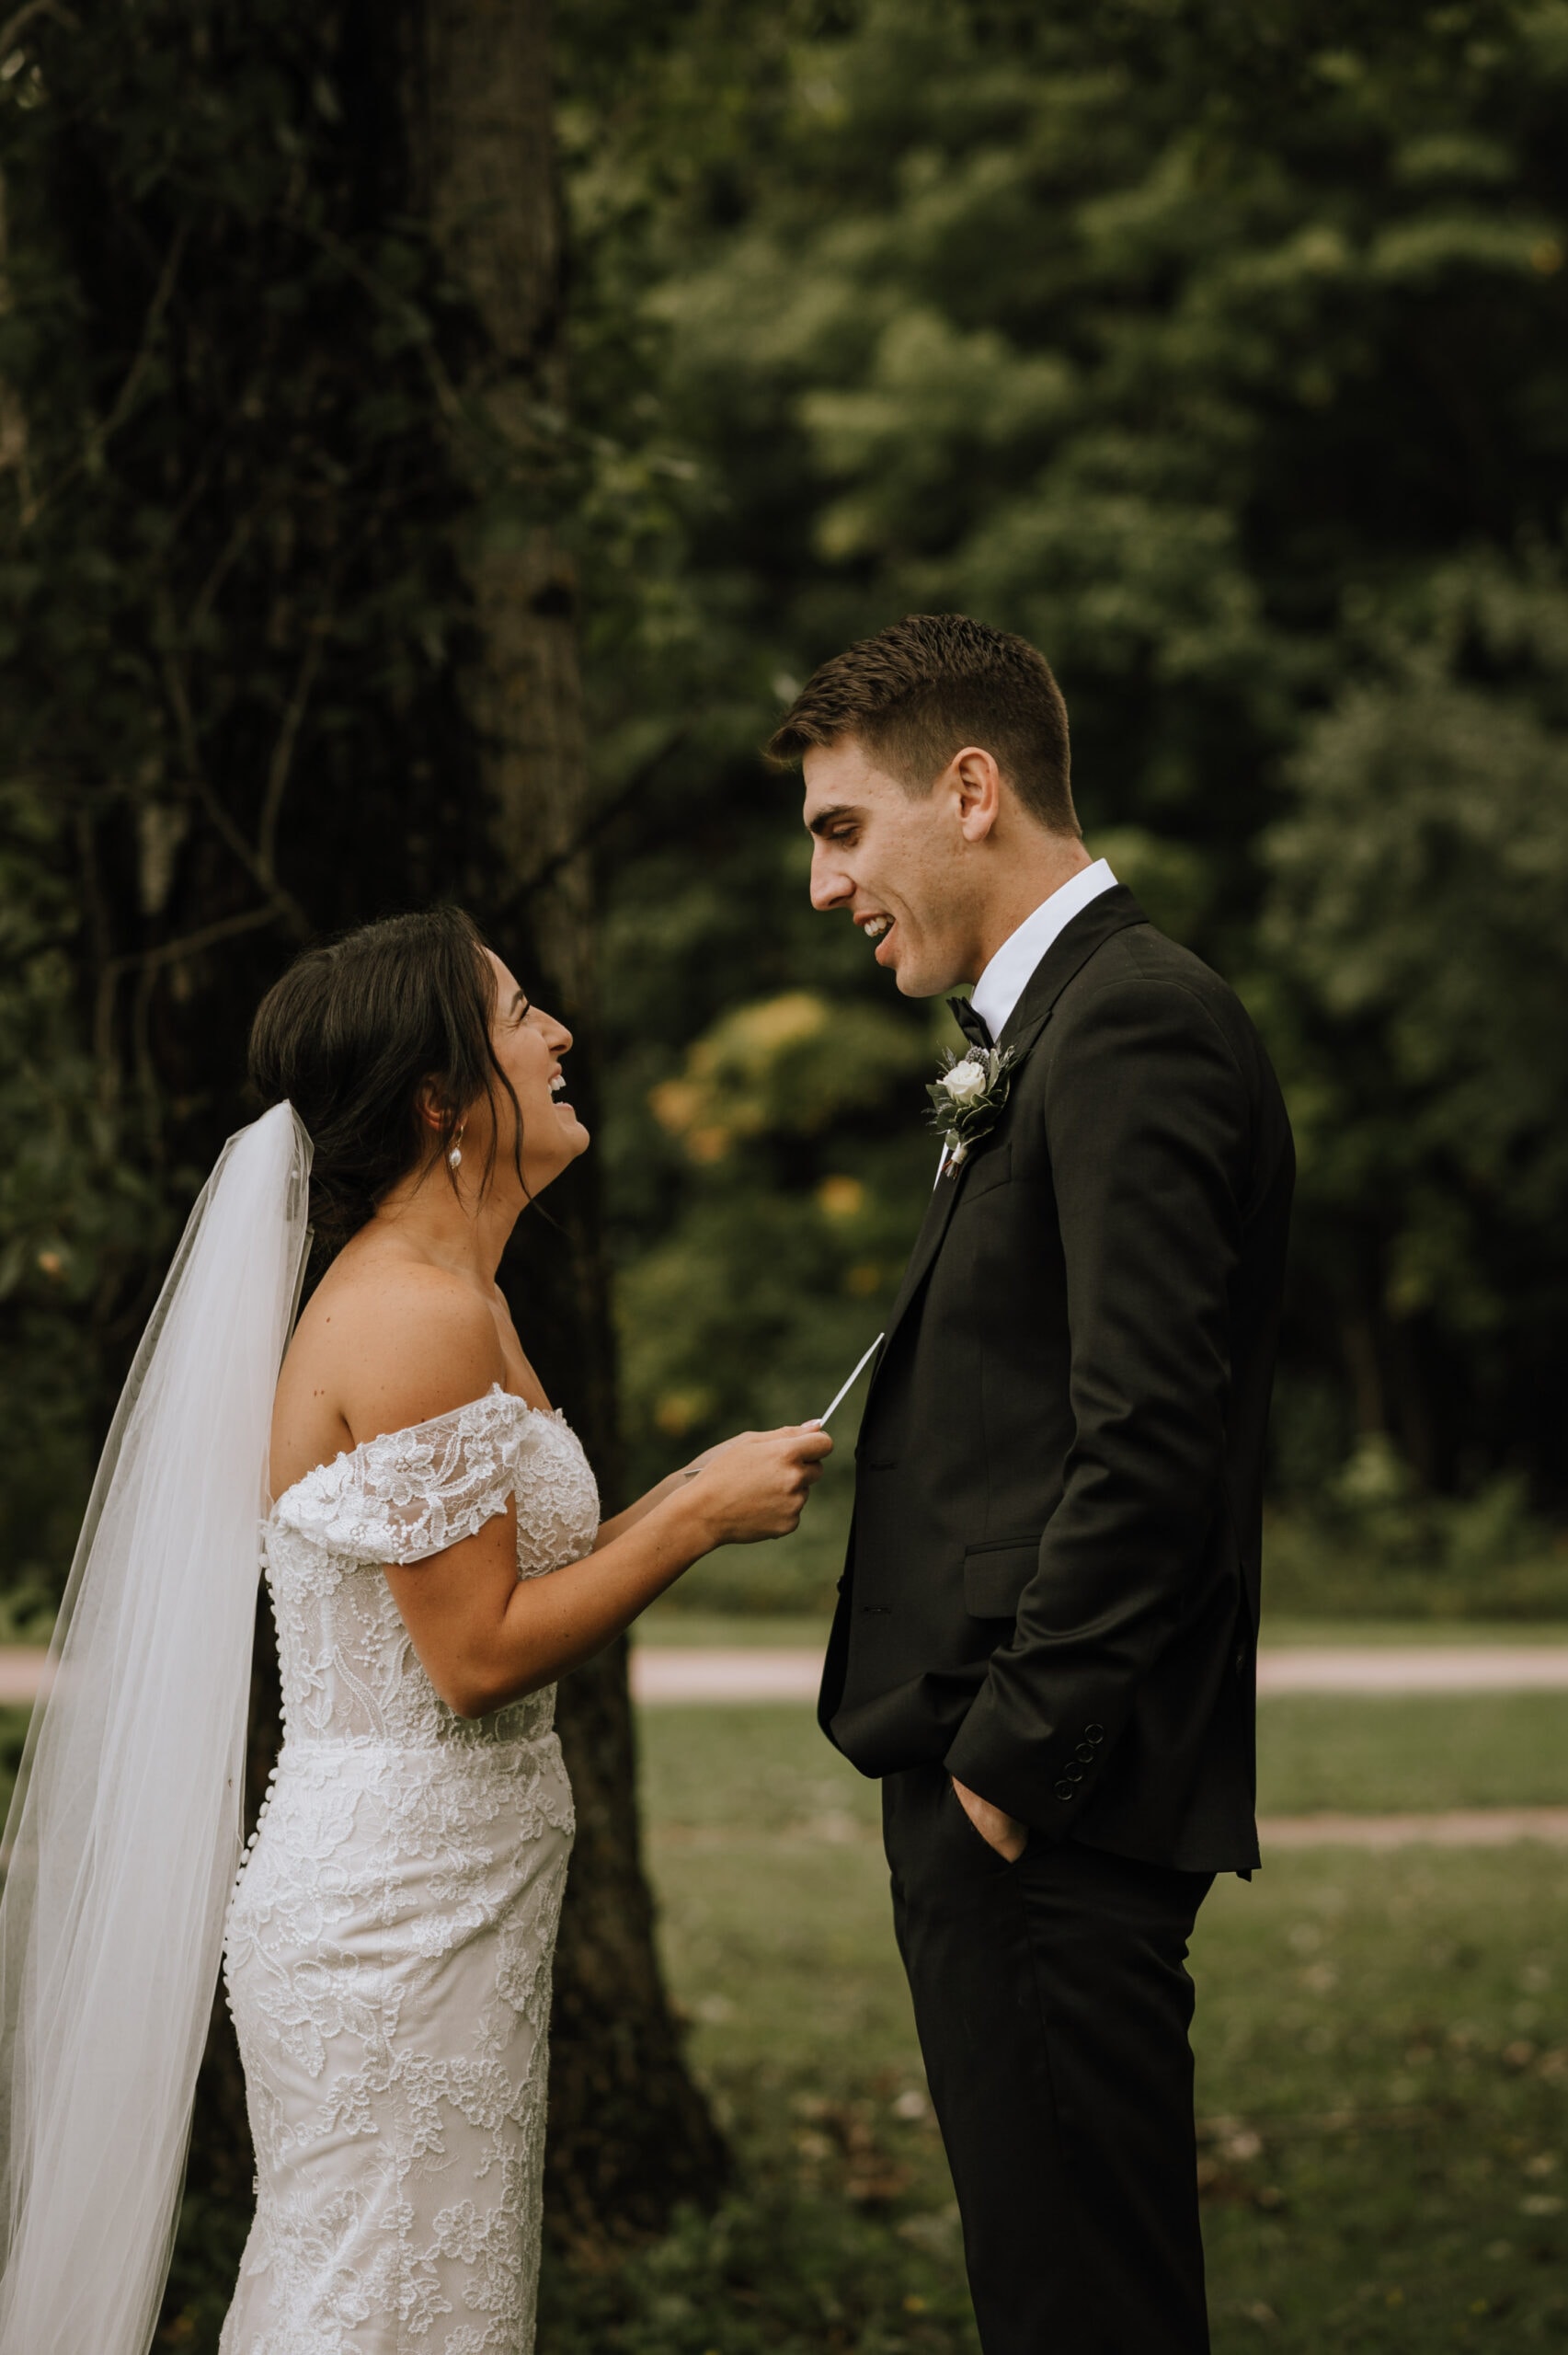 Prince Edward Island Wedding photographer - Michaela Bell Photography 